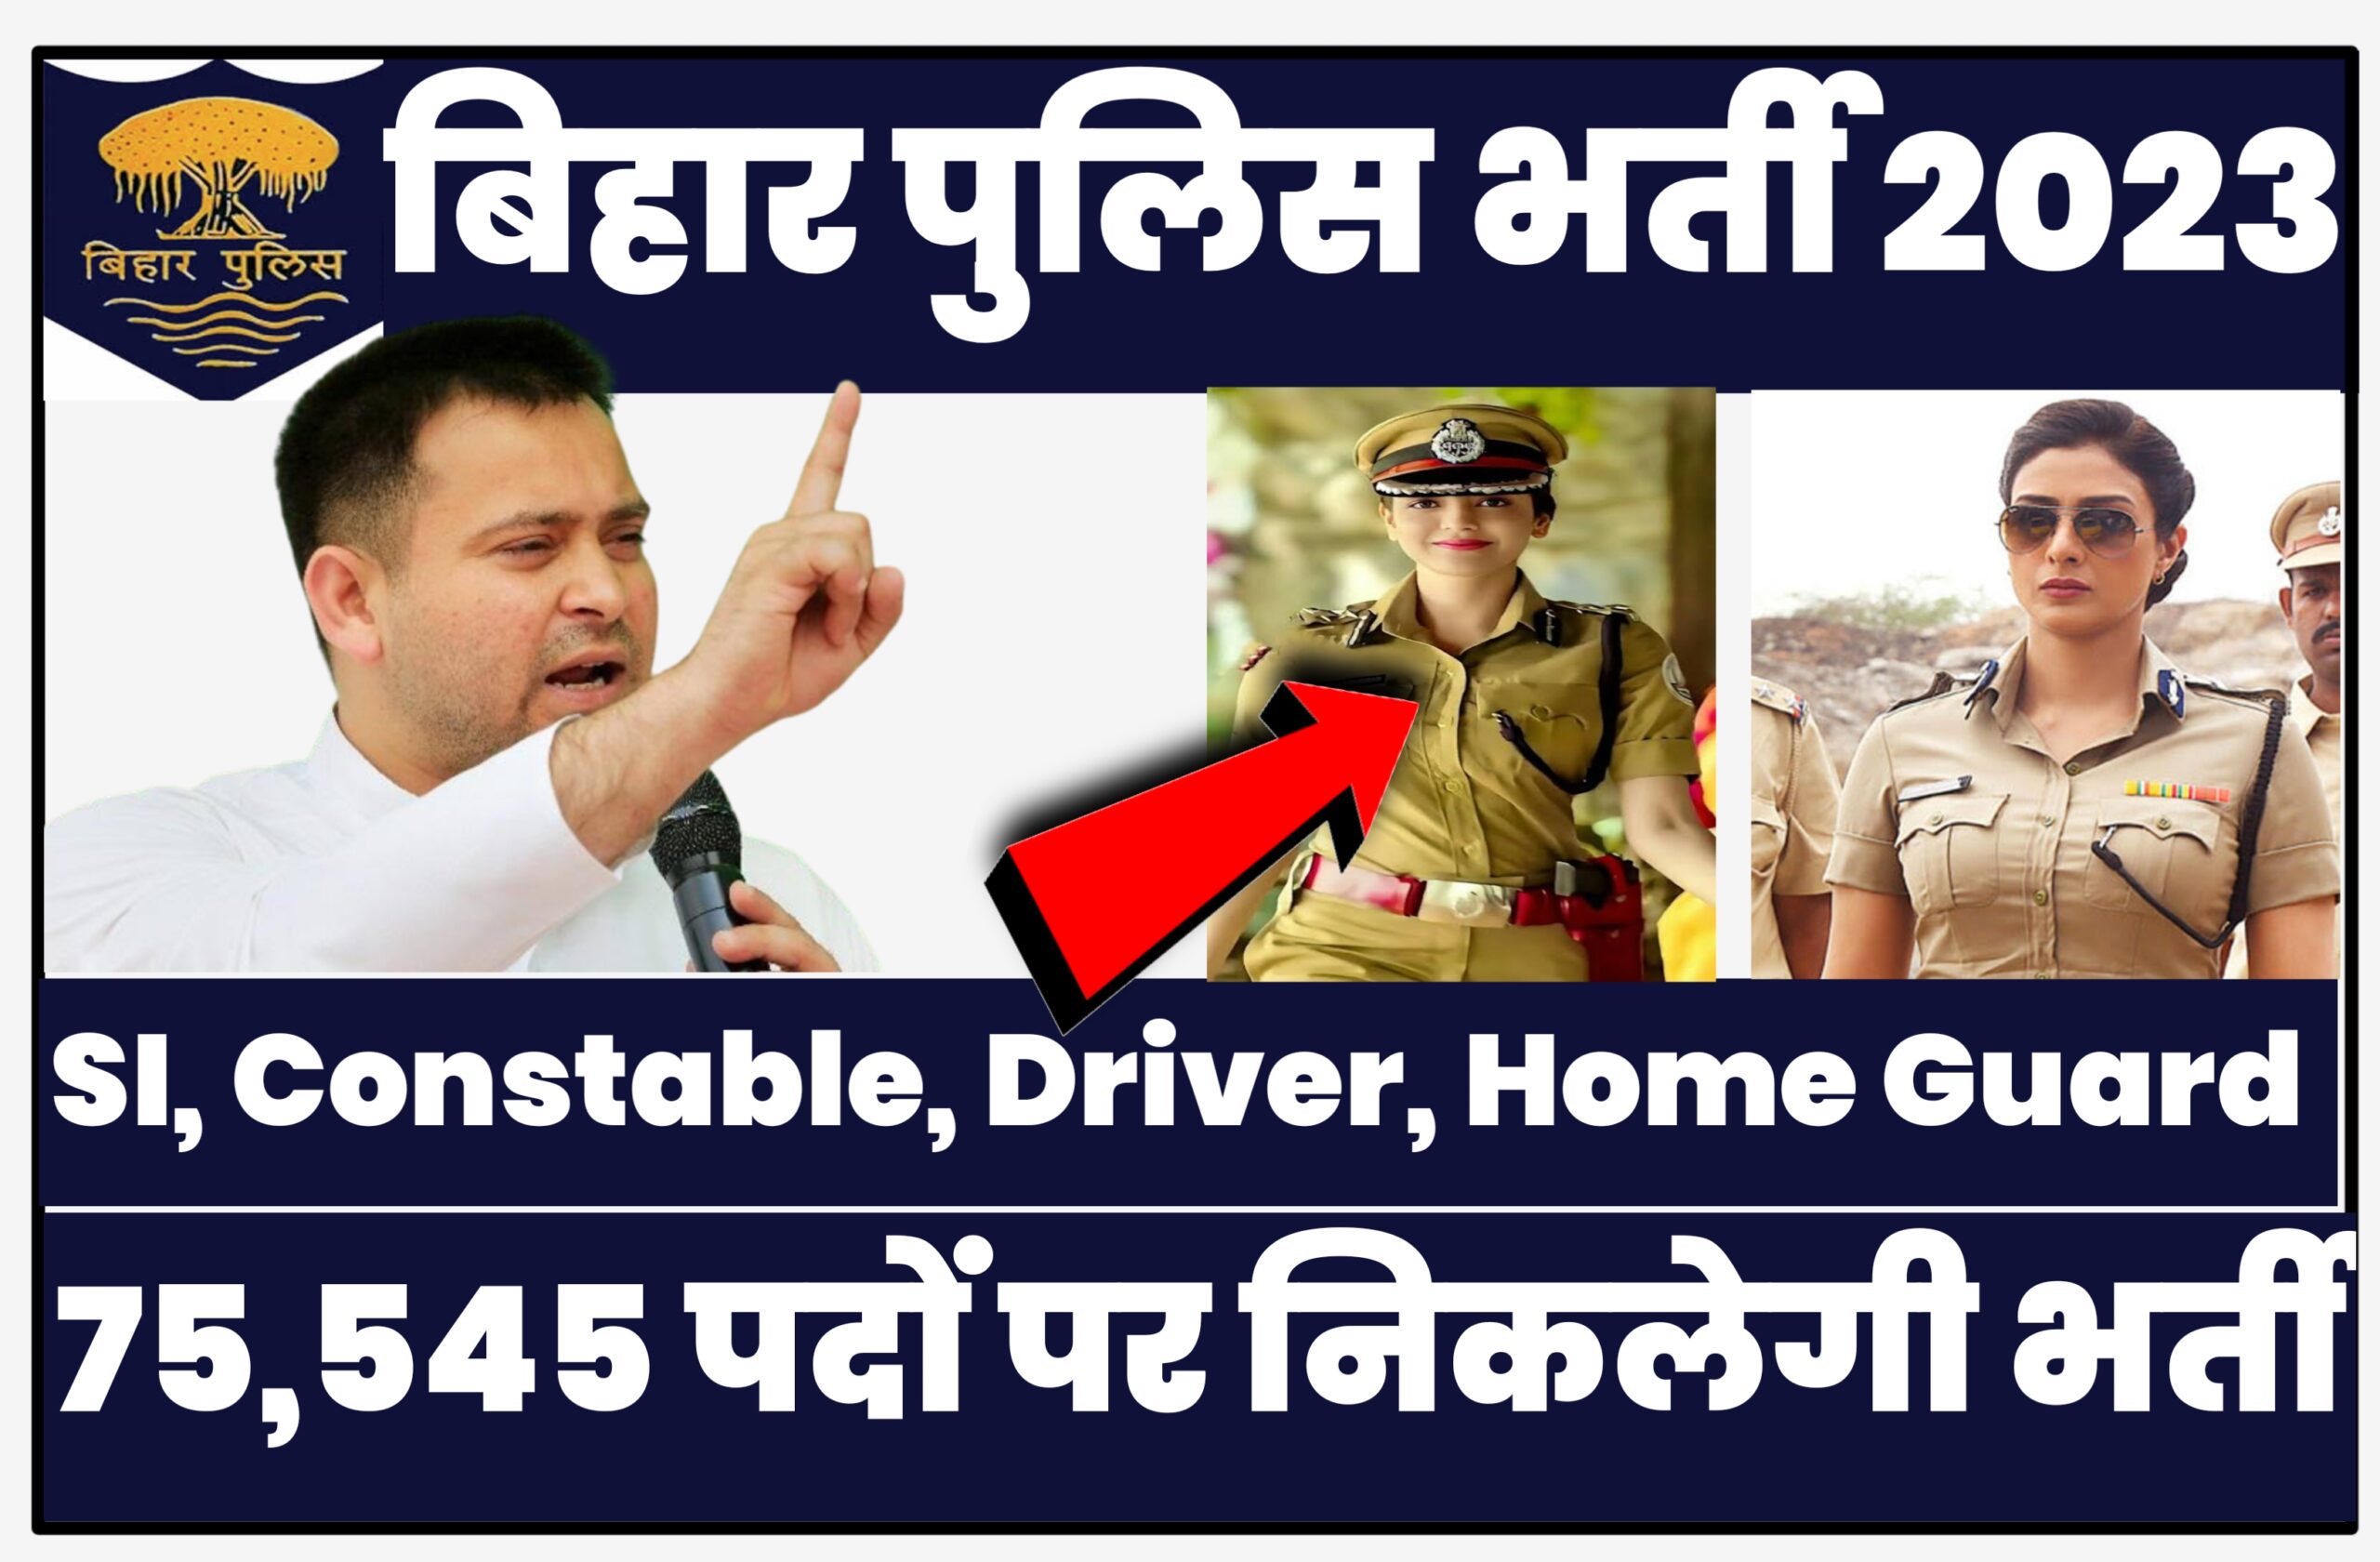 Bihar police bharti 2023